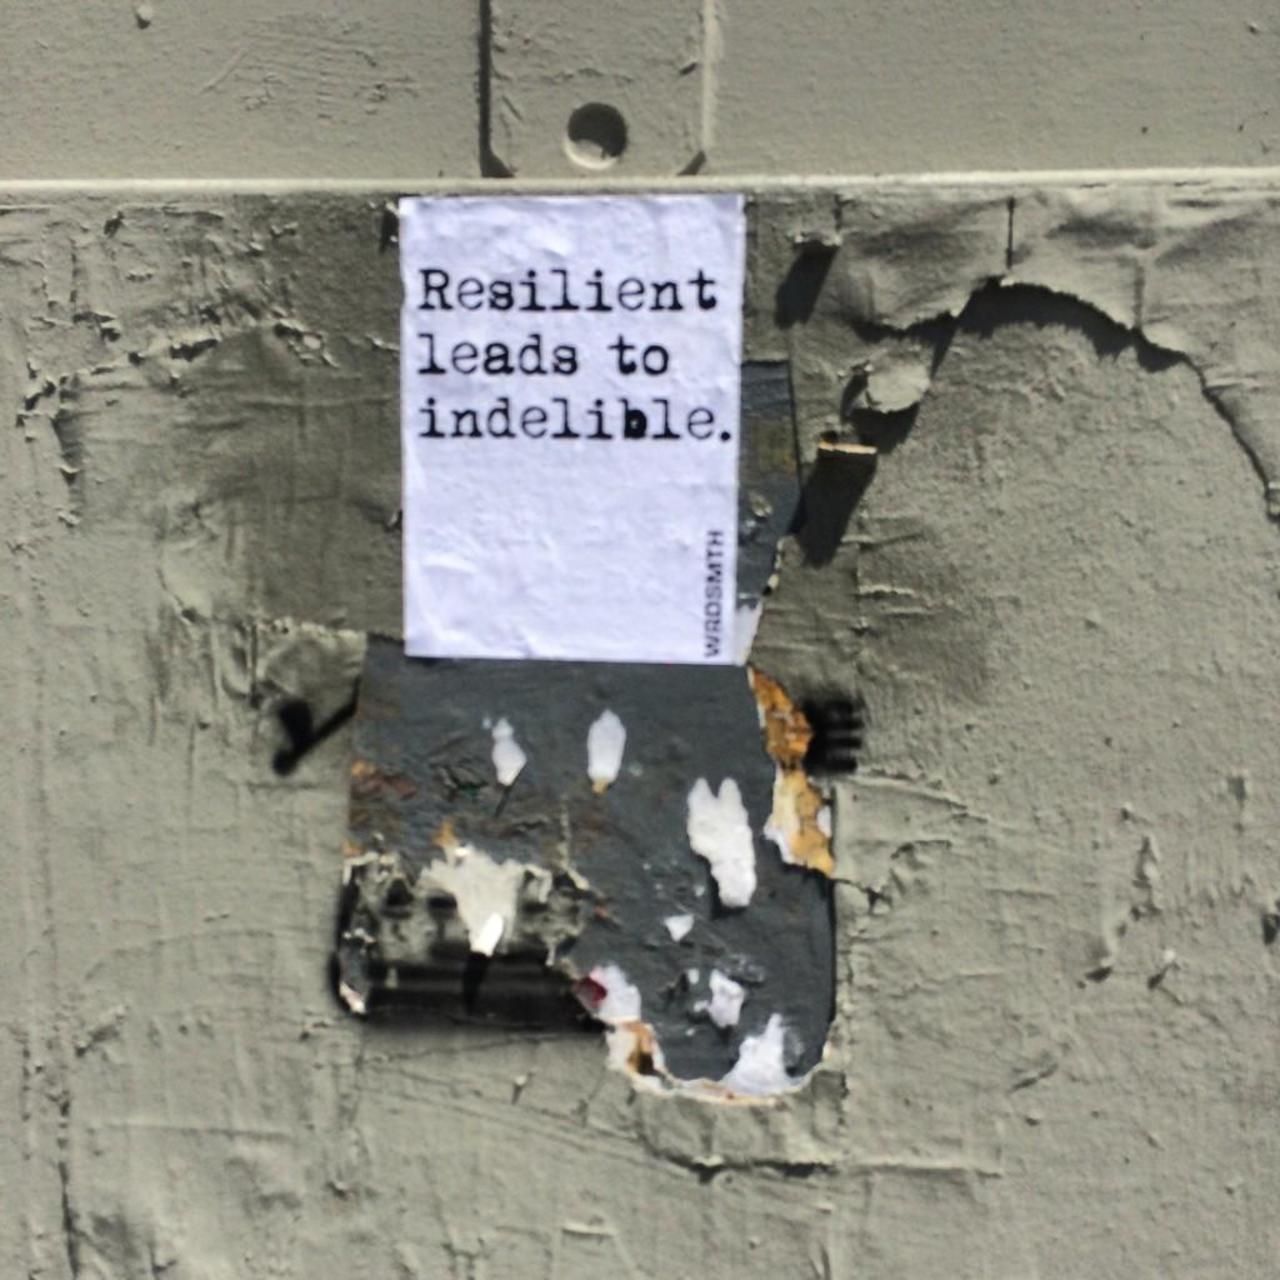 Resilient leads to indelible... #graffiti #brokentypewriter @WRDSMTHinLA #art #lastreetart #streetart #Hollywood http://t.co/p6NNrbwZ4F